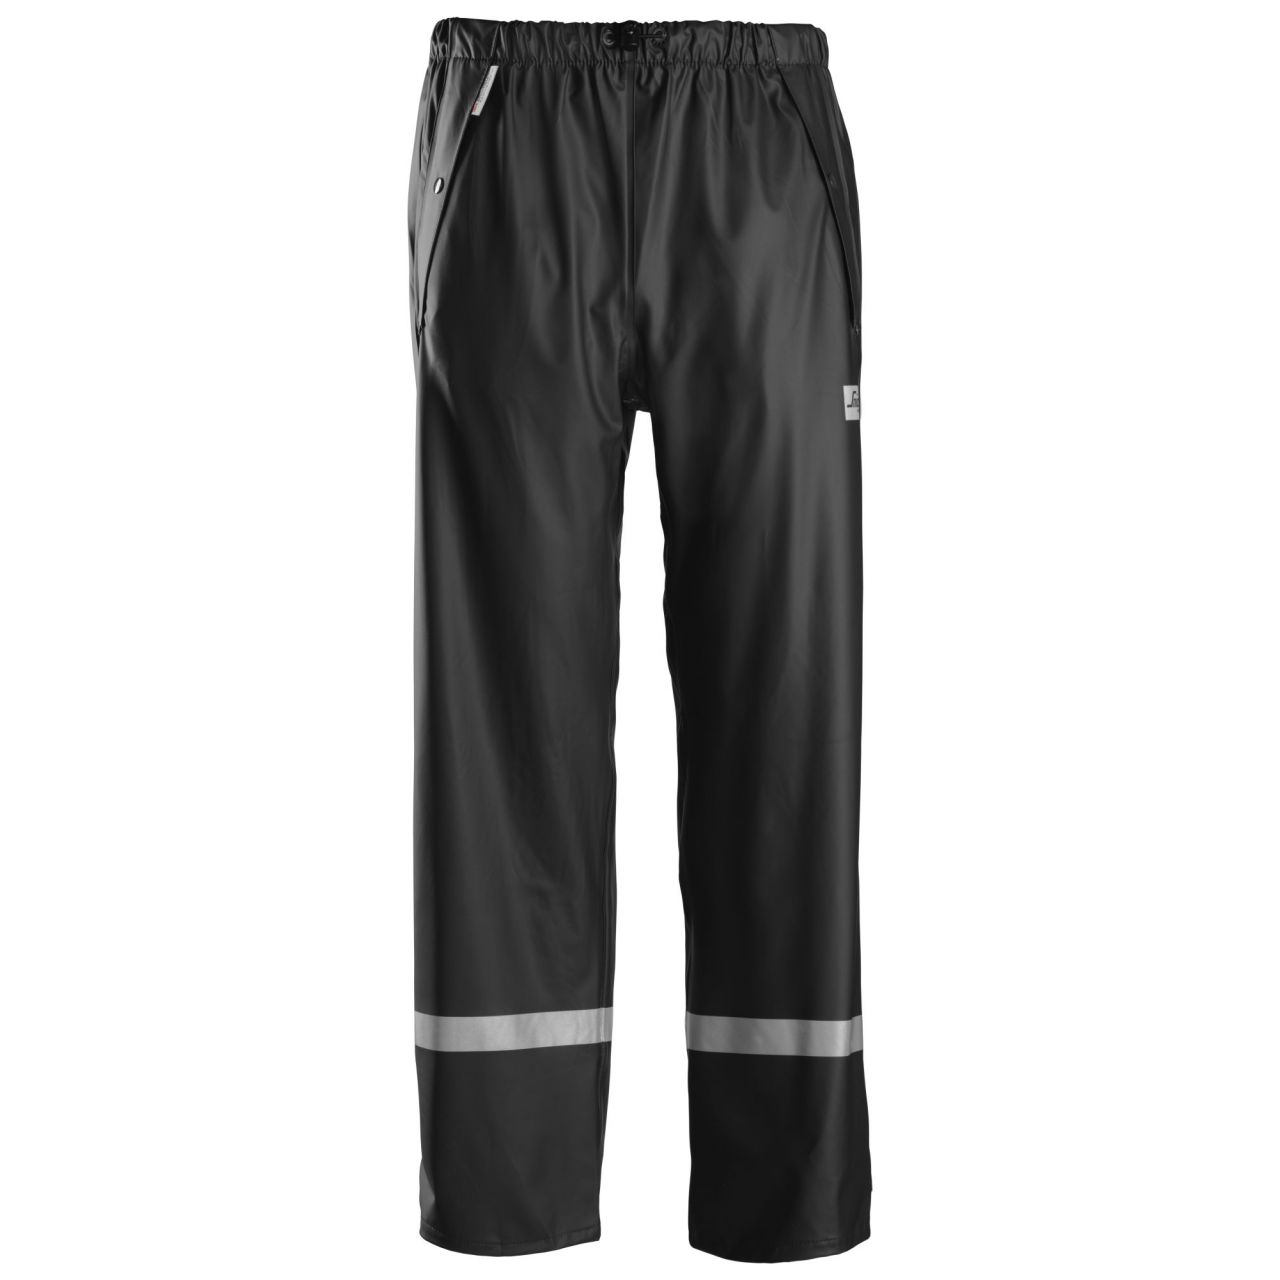 8201 Pantalón Impermeable PU negro talla S